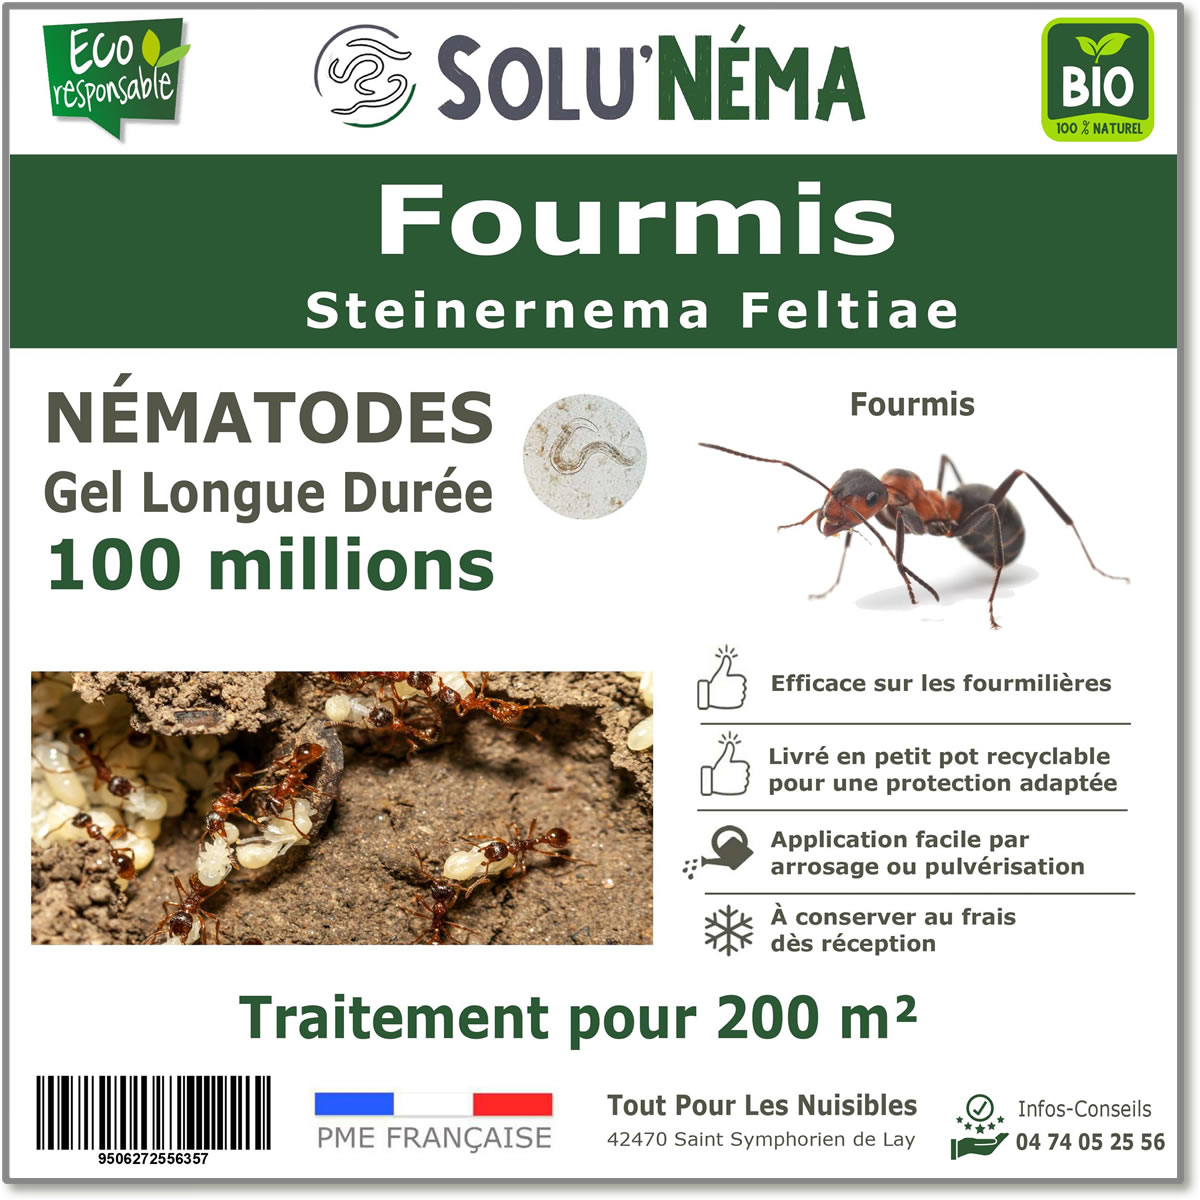 Nematodes ant treatment 100 million